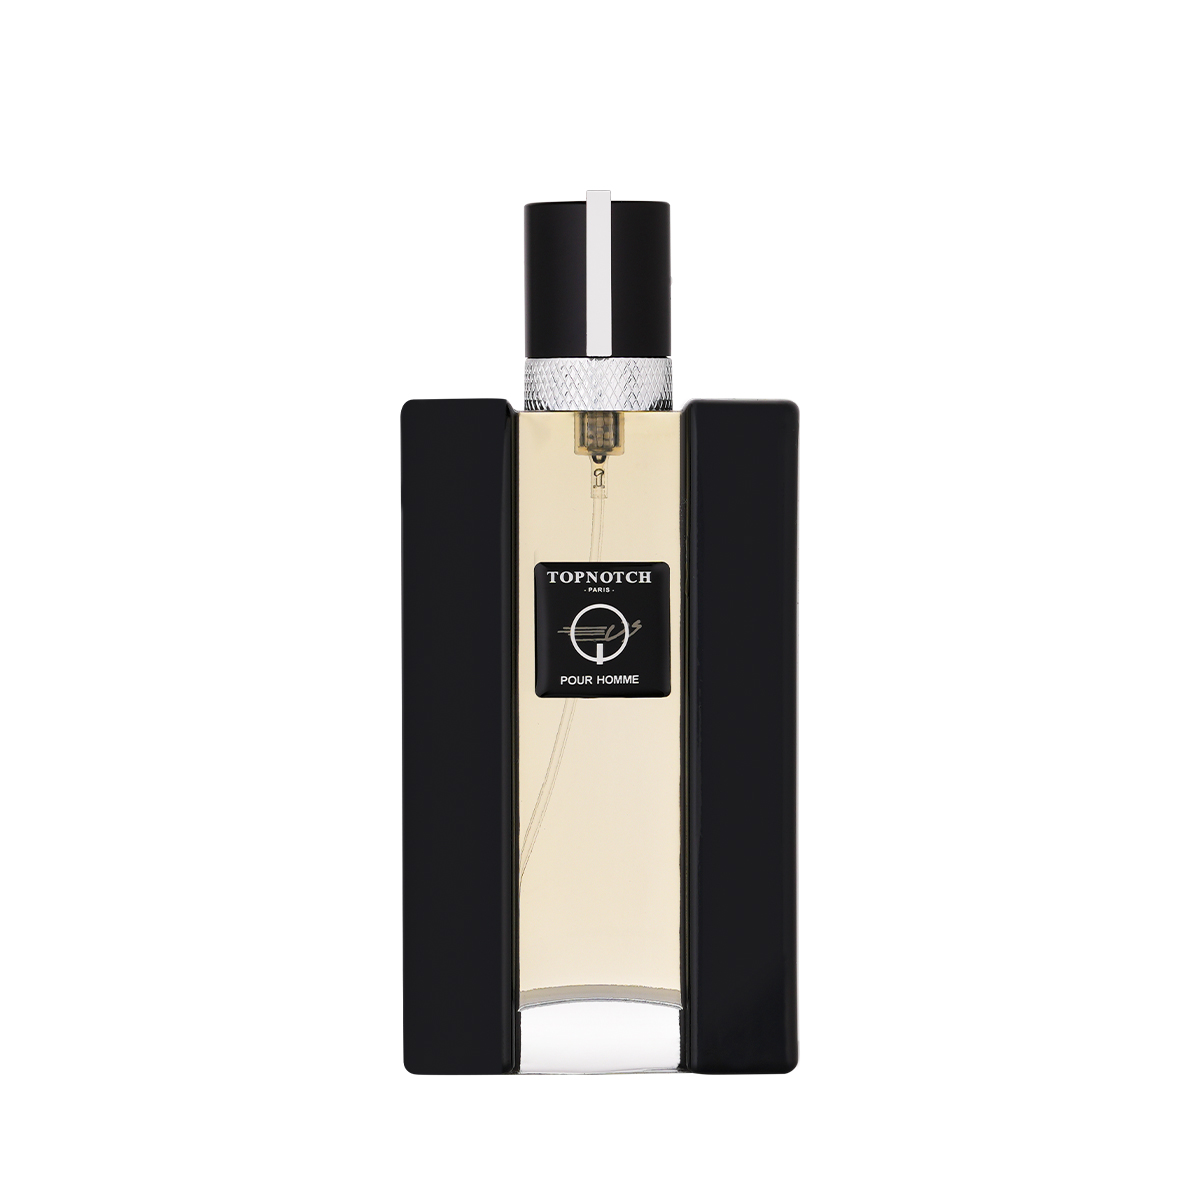 Top Notch Perfume by v.s 120ml 120 ml